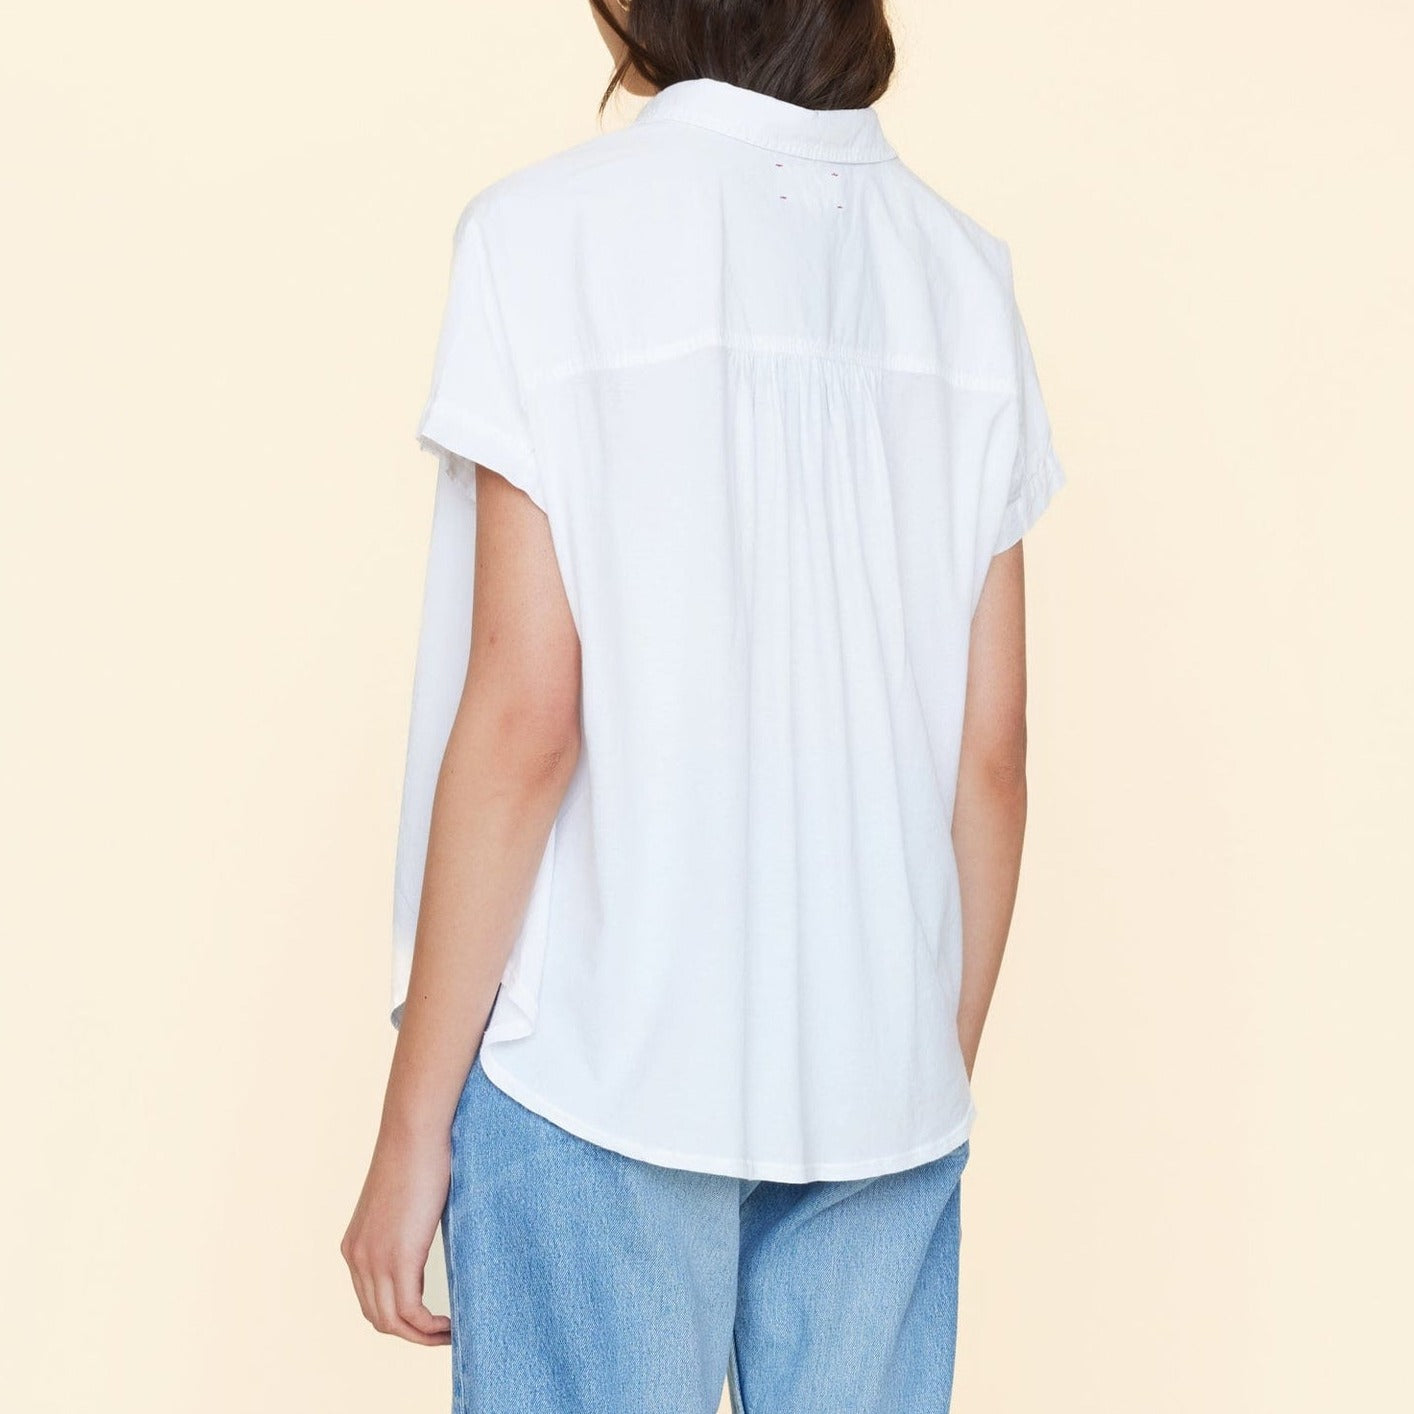 Pax Short Sleeve Shirt in White